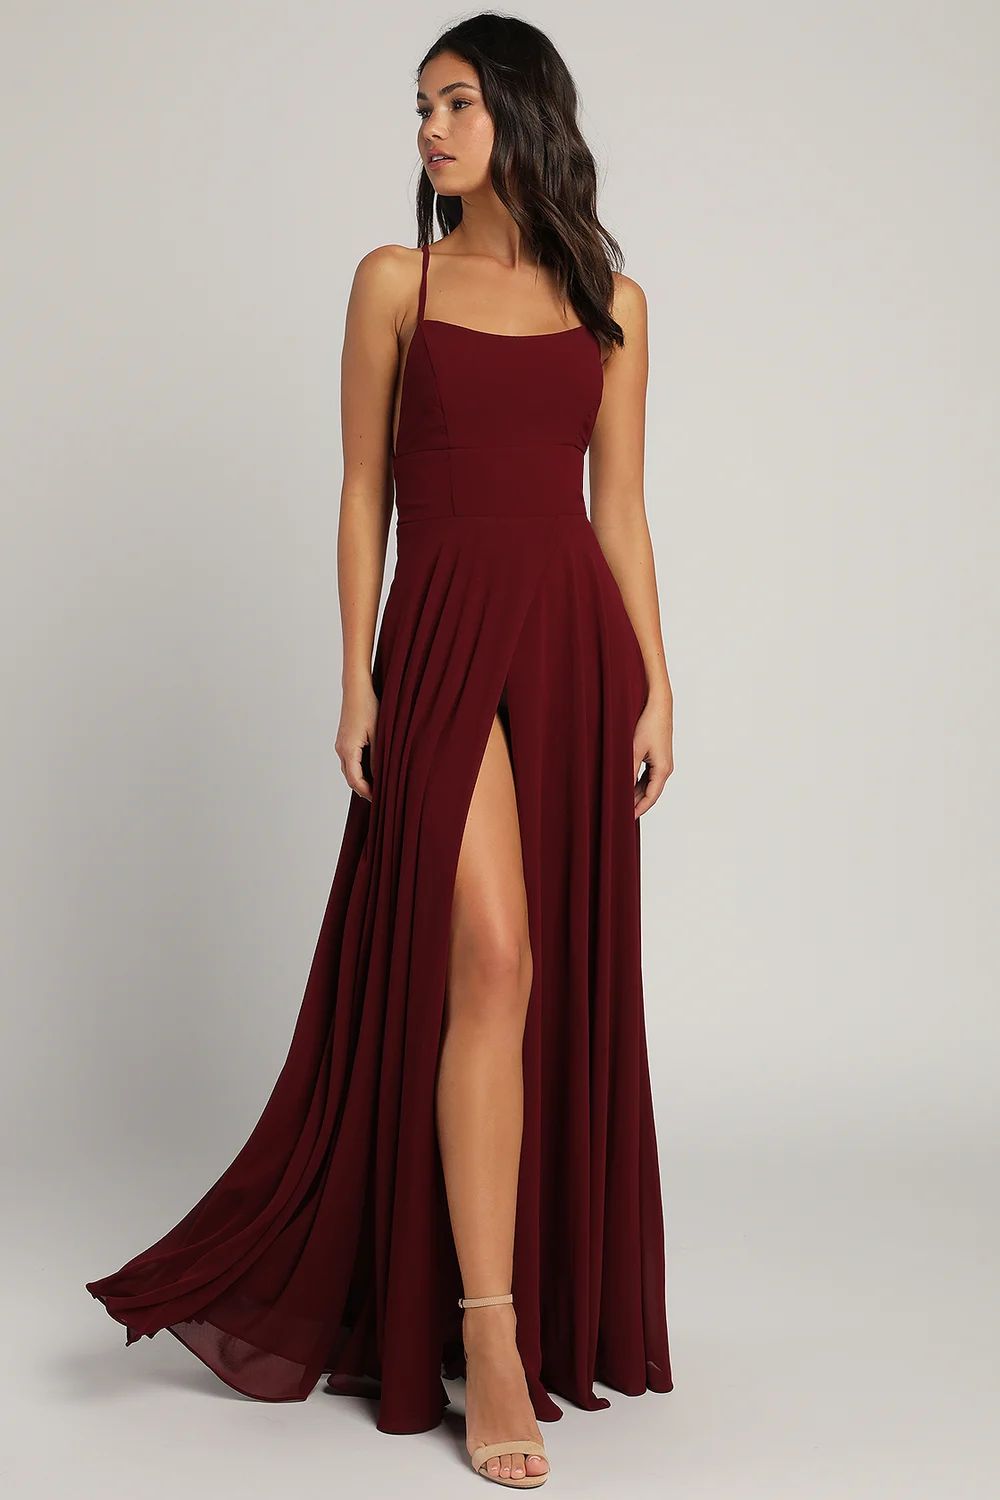 Dreamy Romance Burgundy Backless Maxi Dress | Lulus (US)